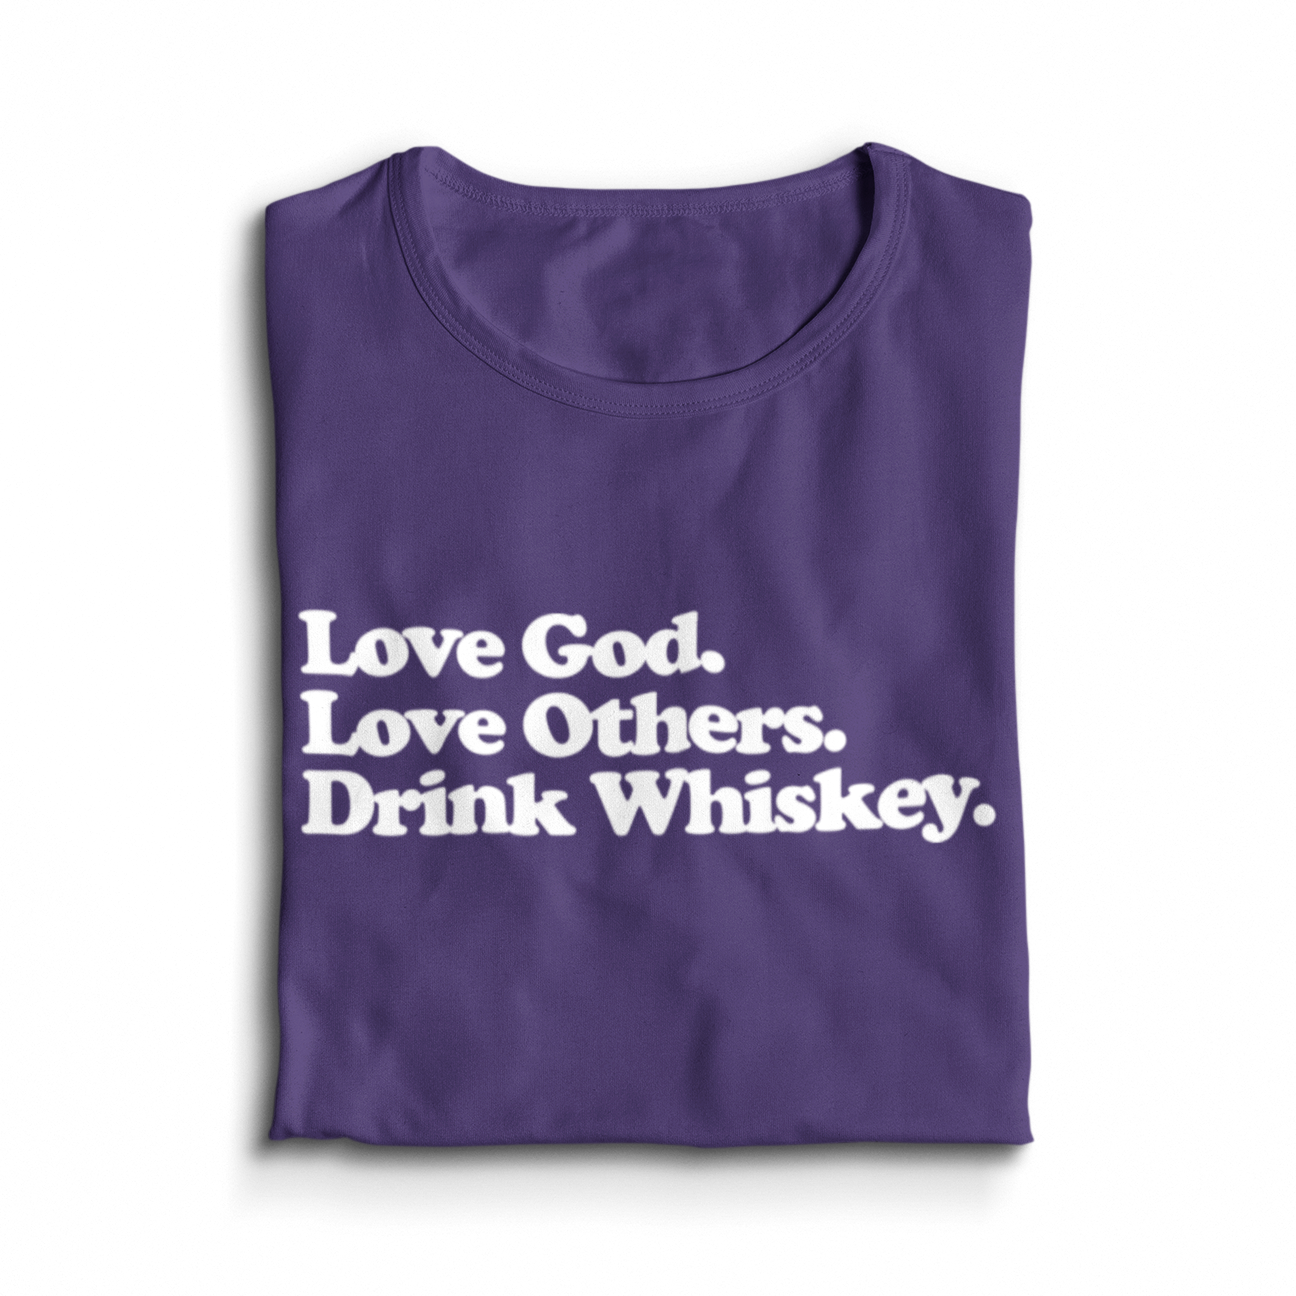 Drink Whiskey T-shirt